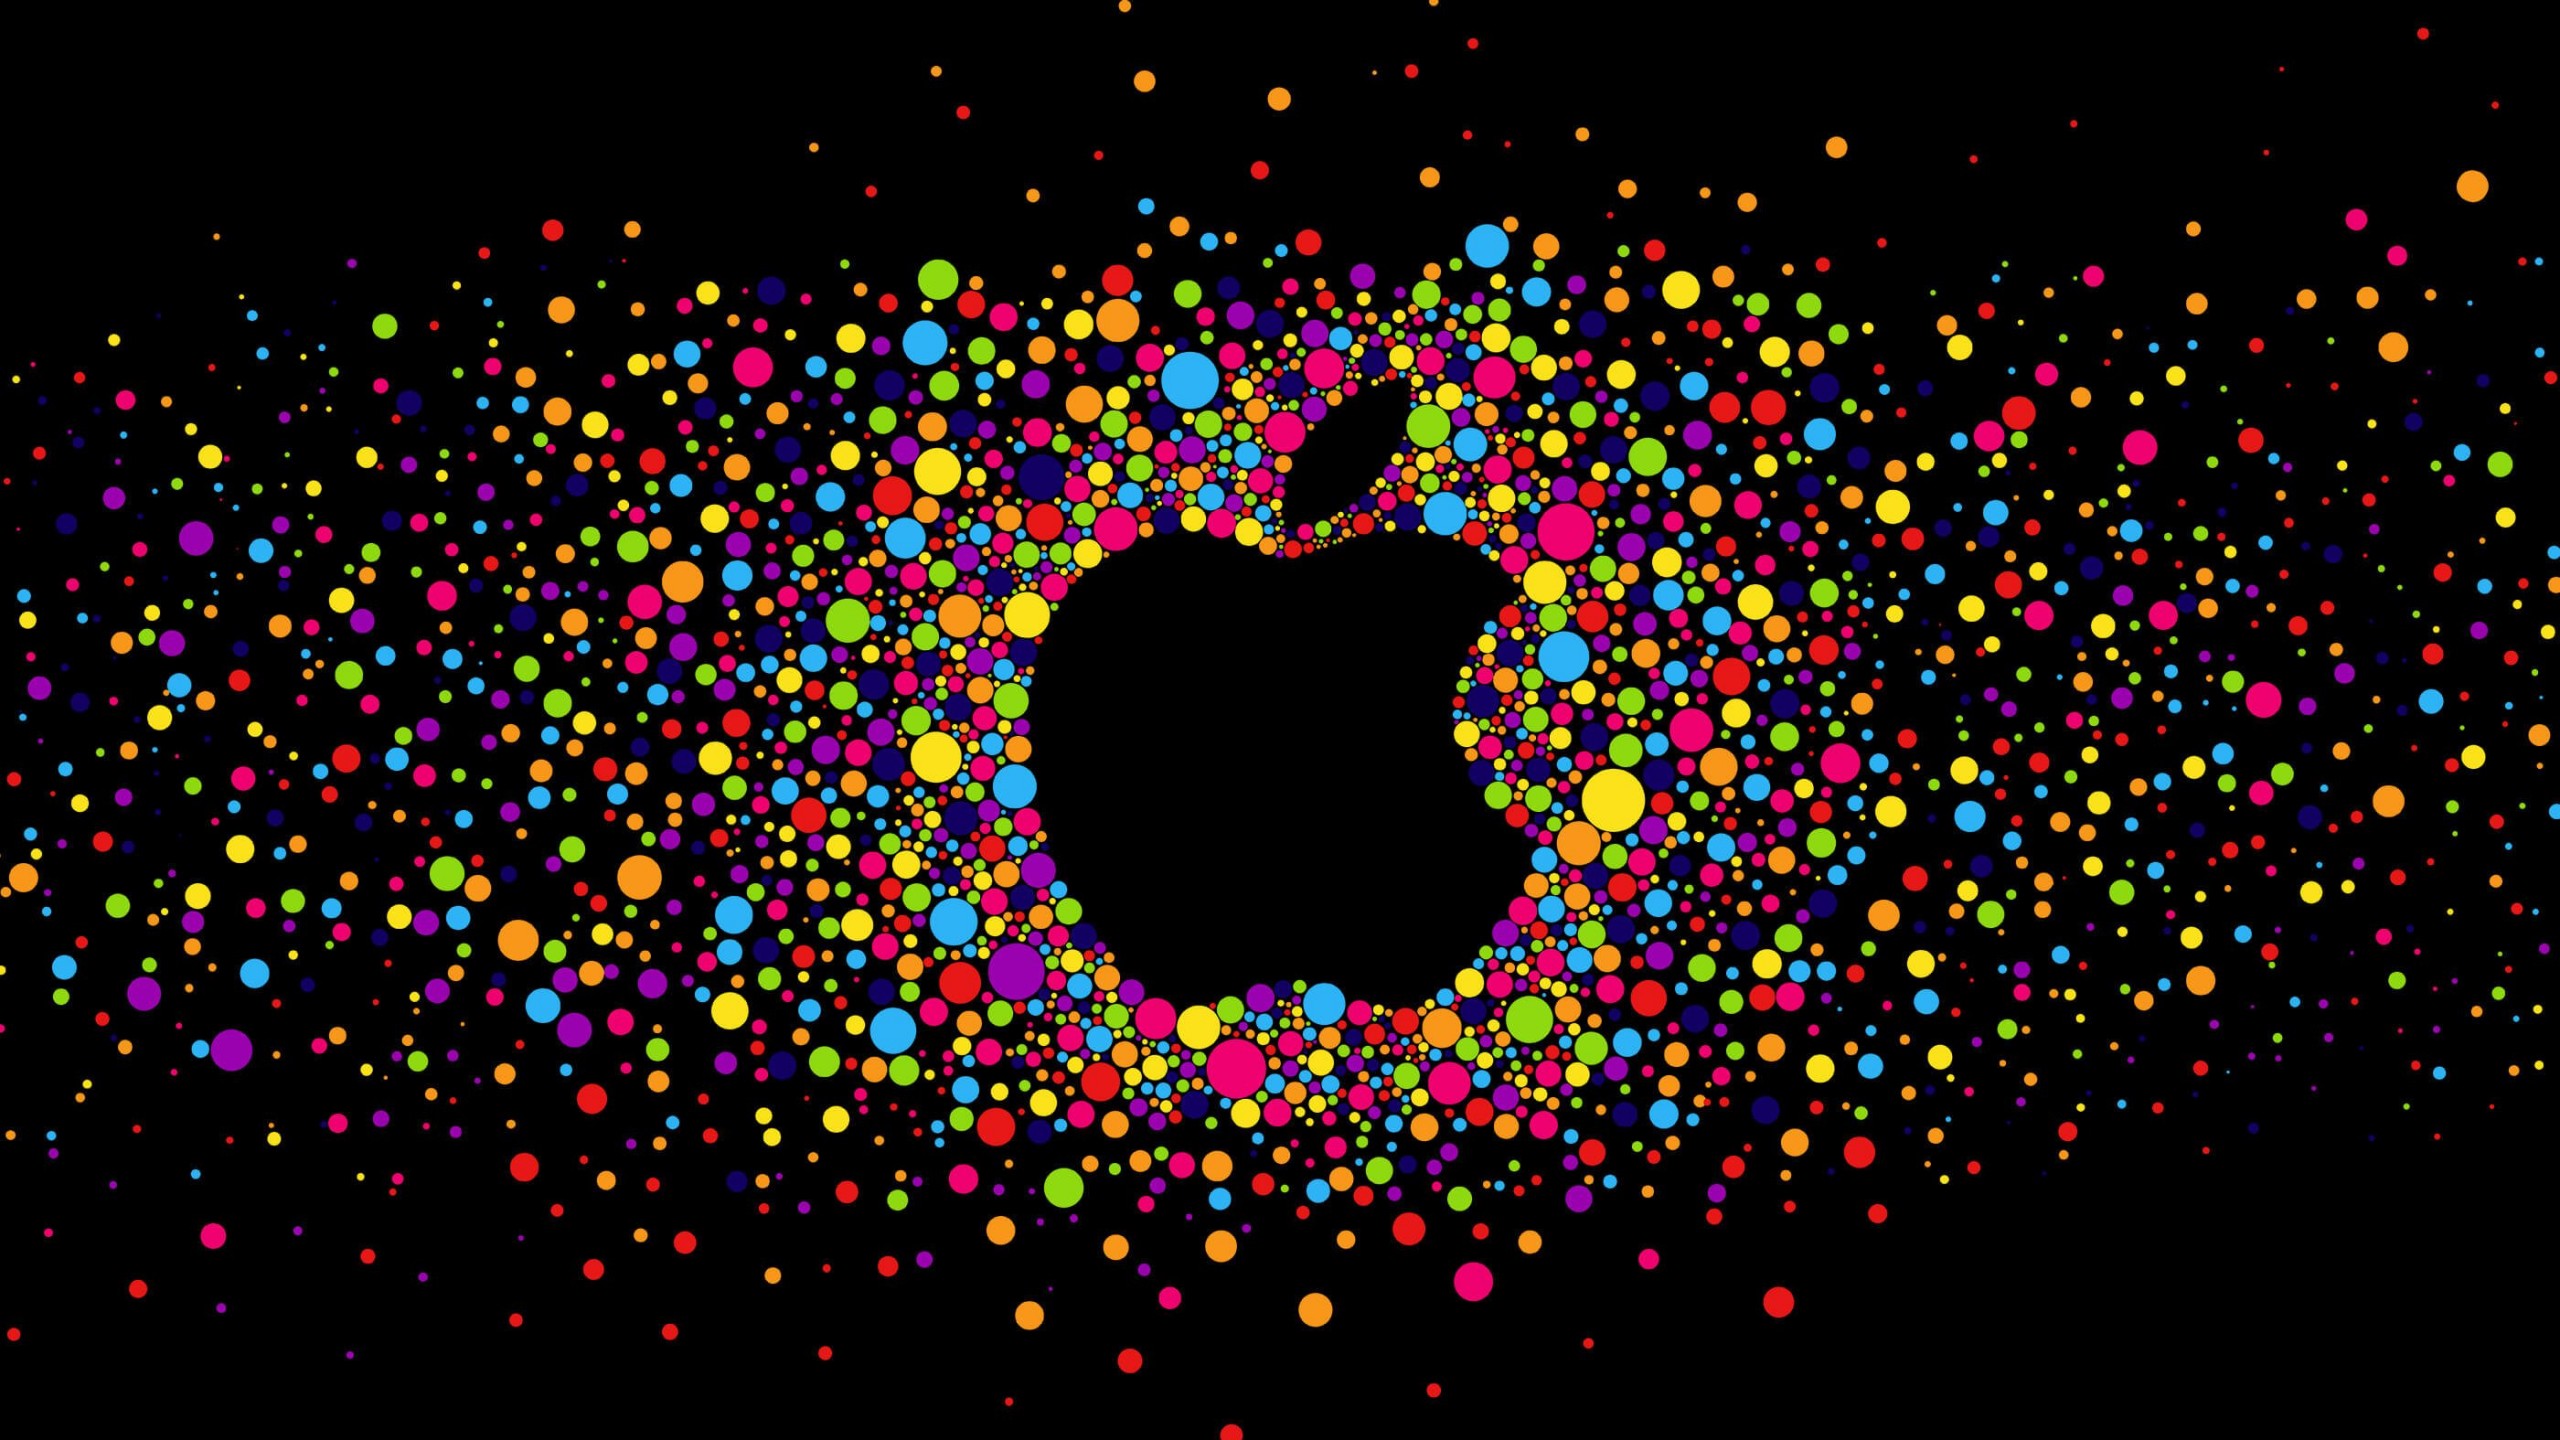 Black Apple Logo Particles Wallpaper for Desktop 2560x1440